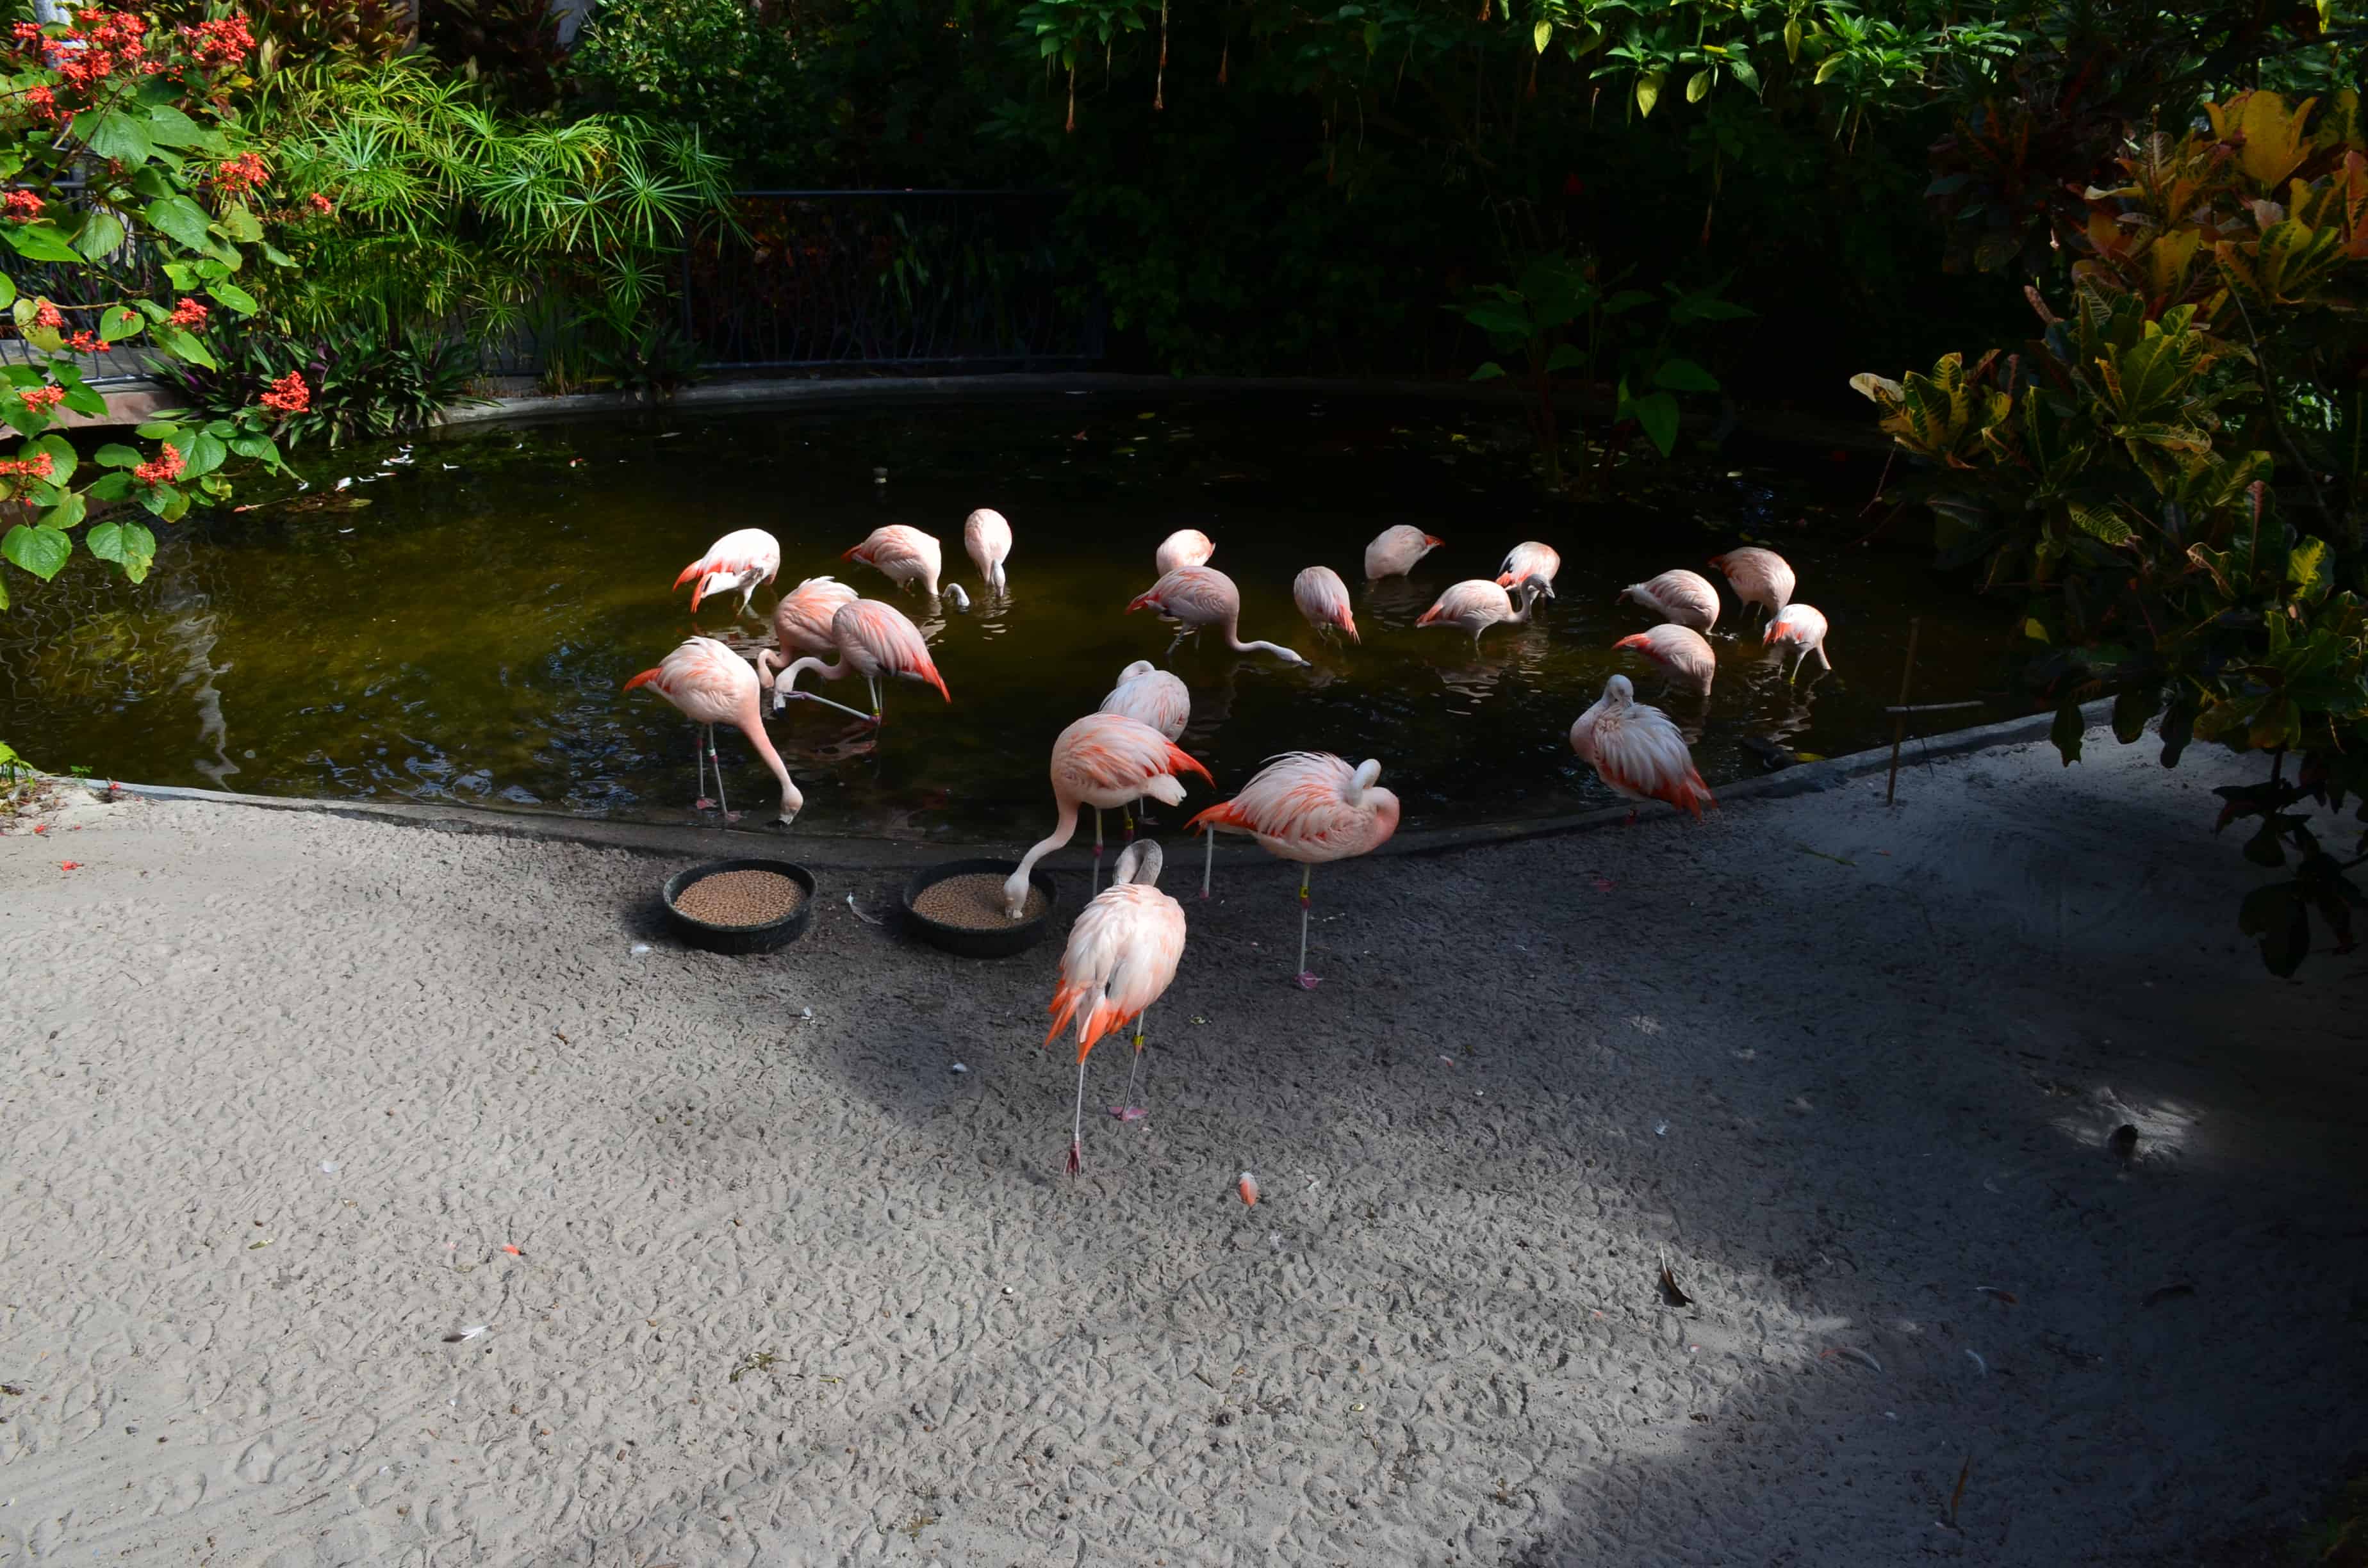 Flamingos at the Sunken Gardens in St. Petersburg, Florida